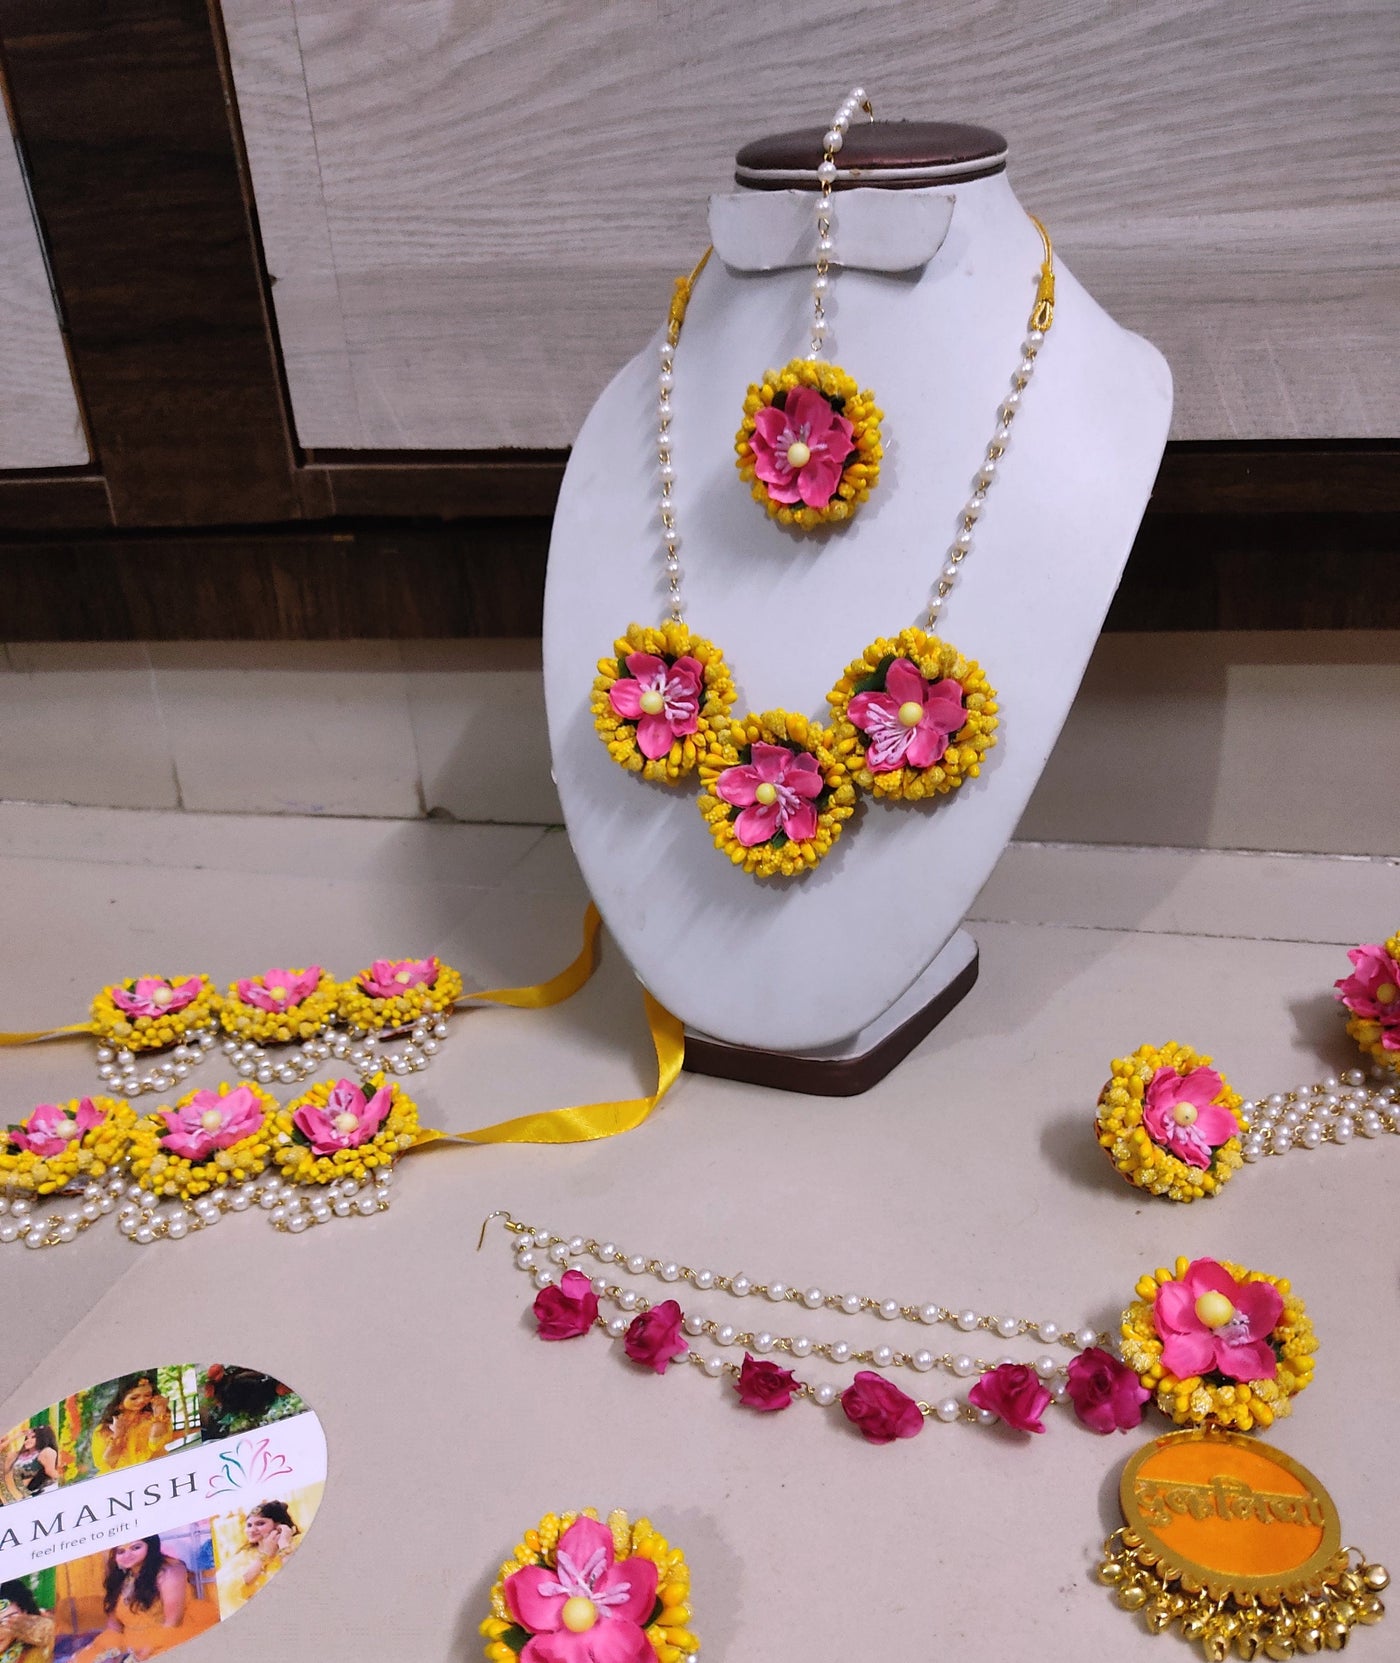 LAMANSH Flower Jewellery Yellow & Pink LAMANSH® Dulhaniyaa Yellow Pink Flower 🌸 Jewellery Set with Kamarbandh for Haldi - Mehendi ceremony / Floral set for Dohle devan function with waistbelt